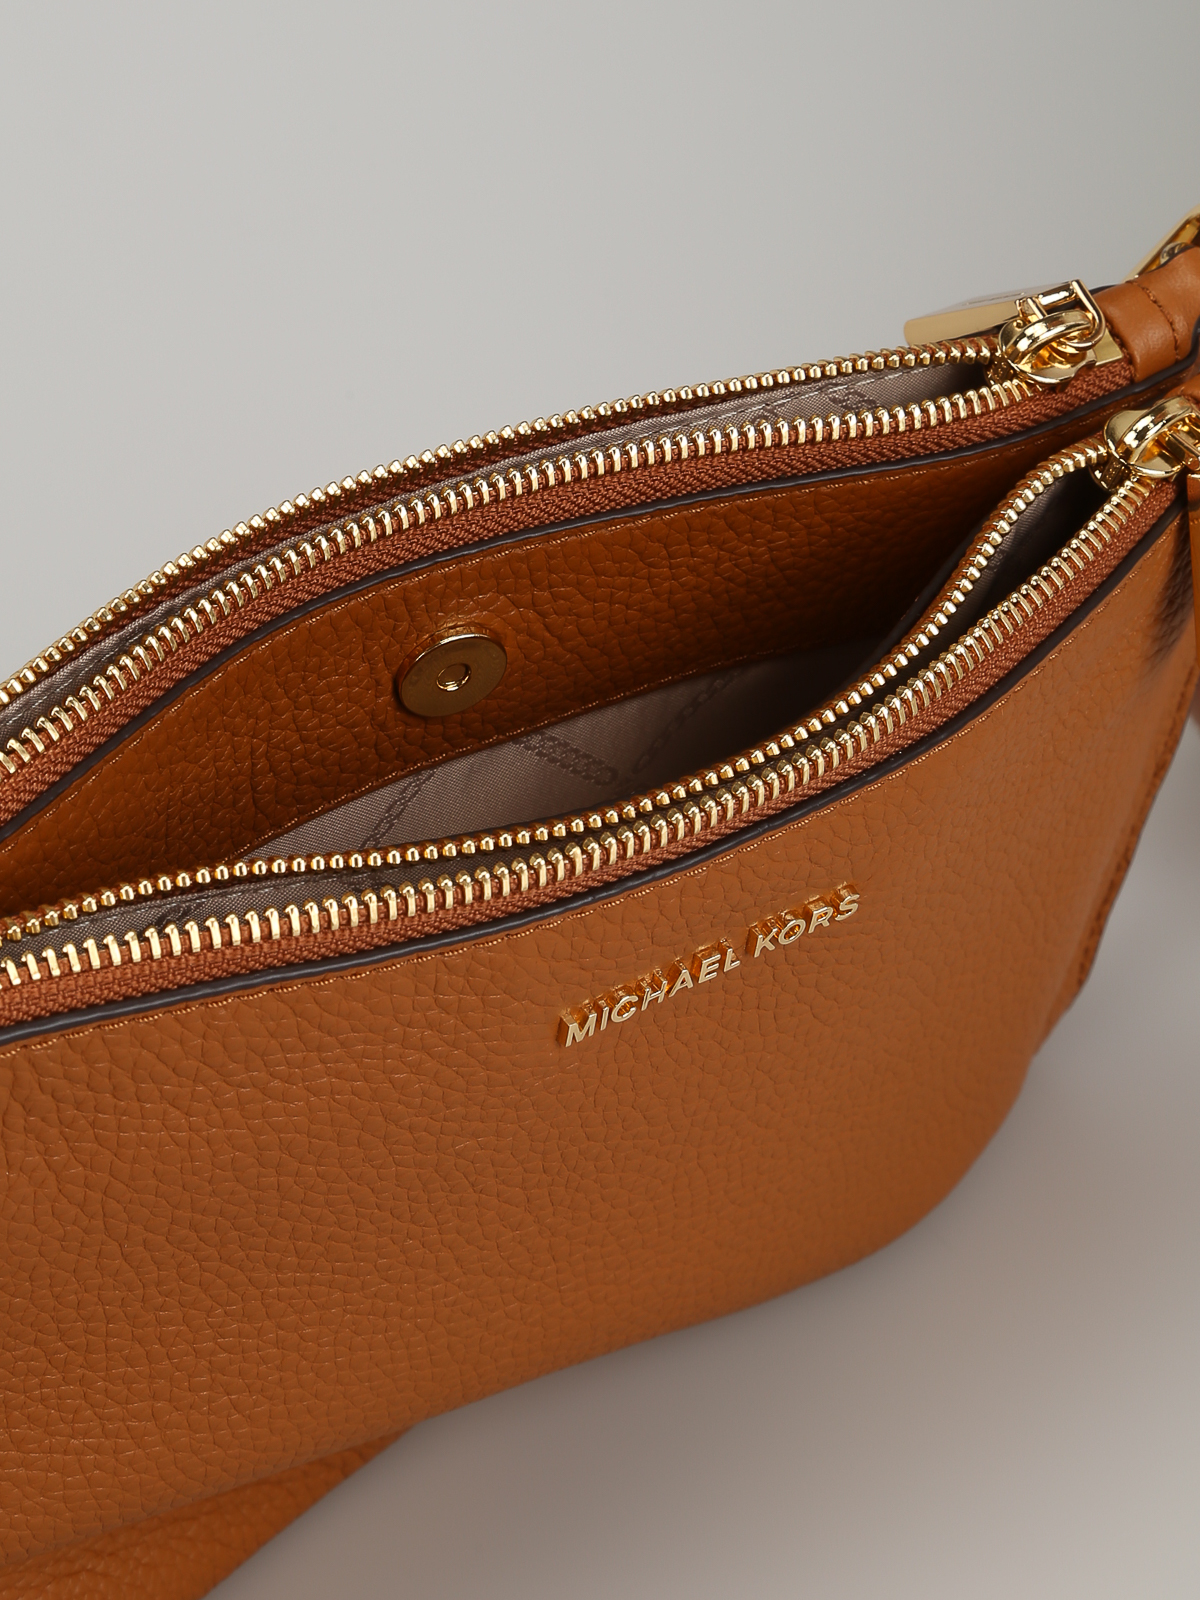 orange and brown michael kors purse